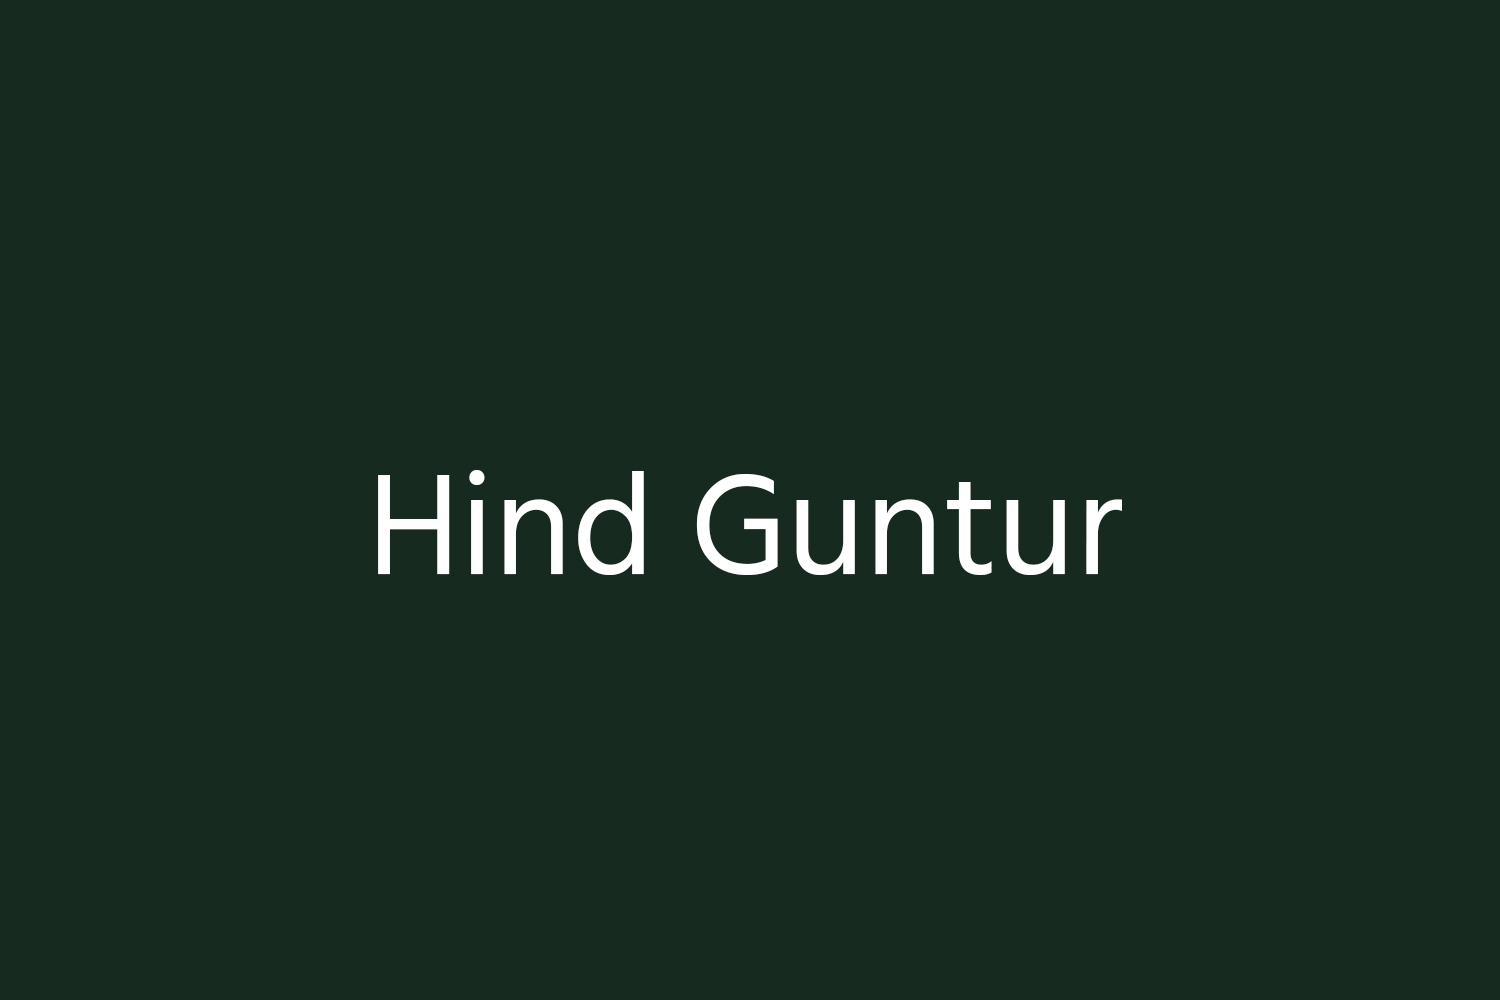 Hind Guntur